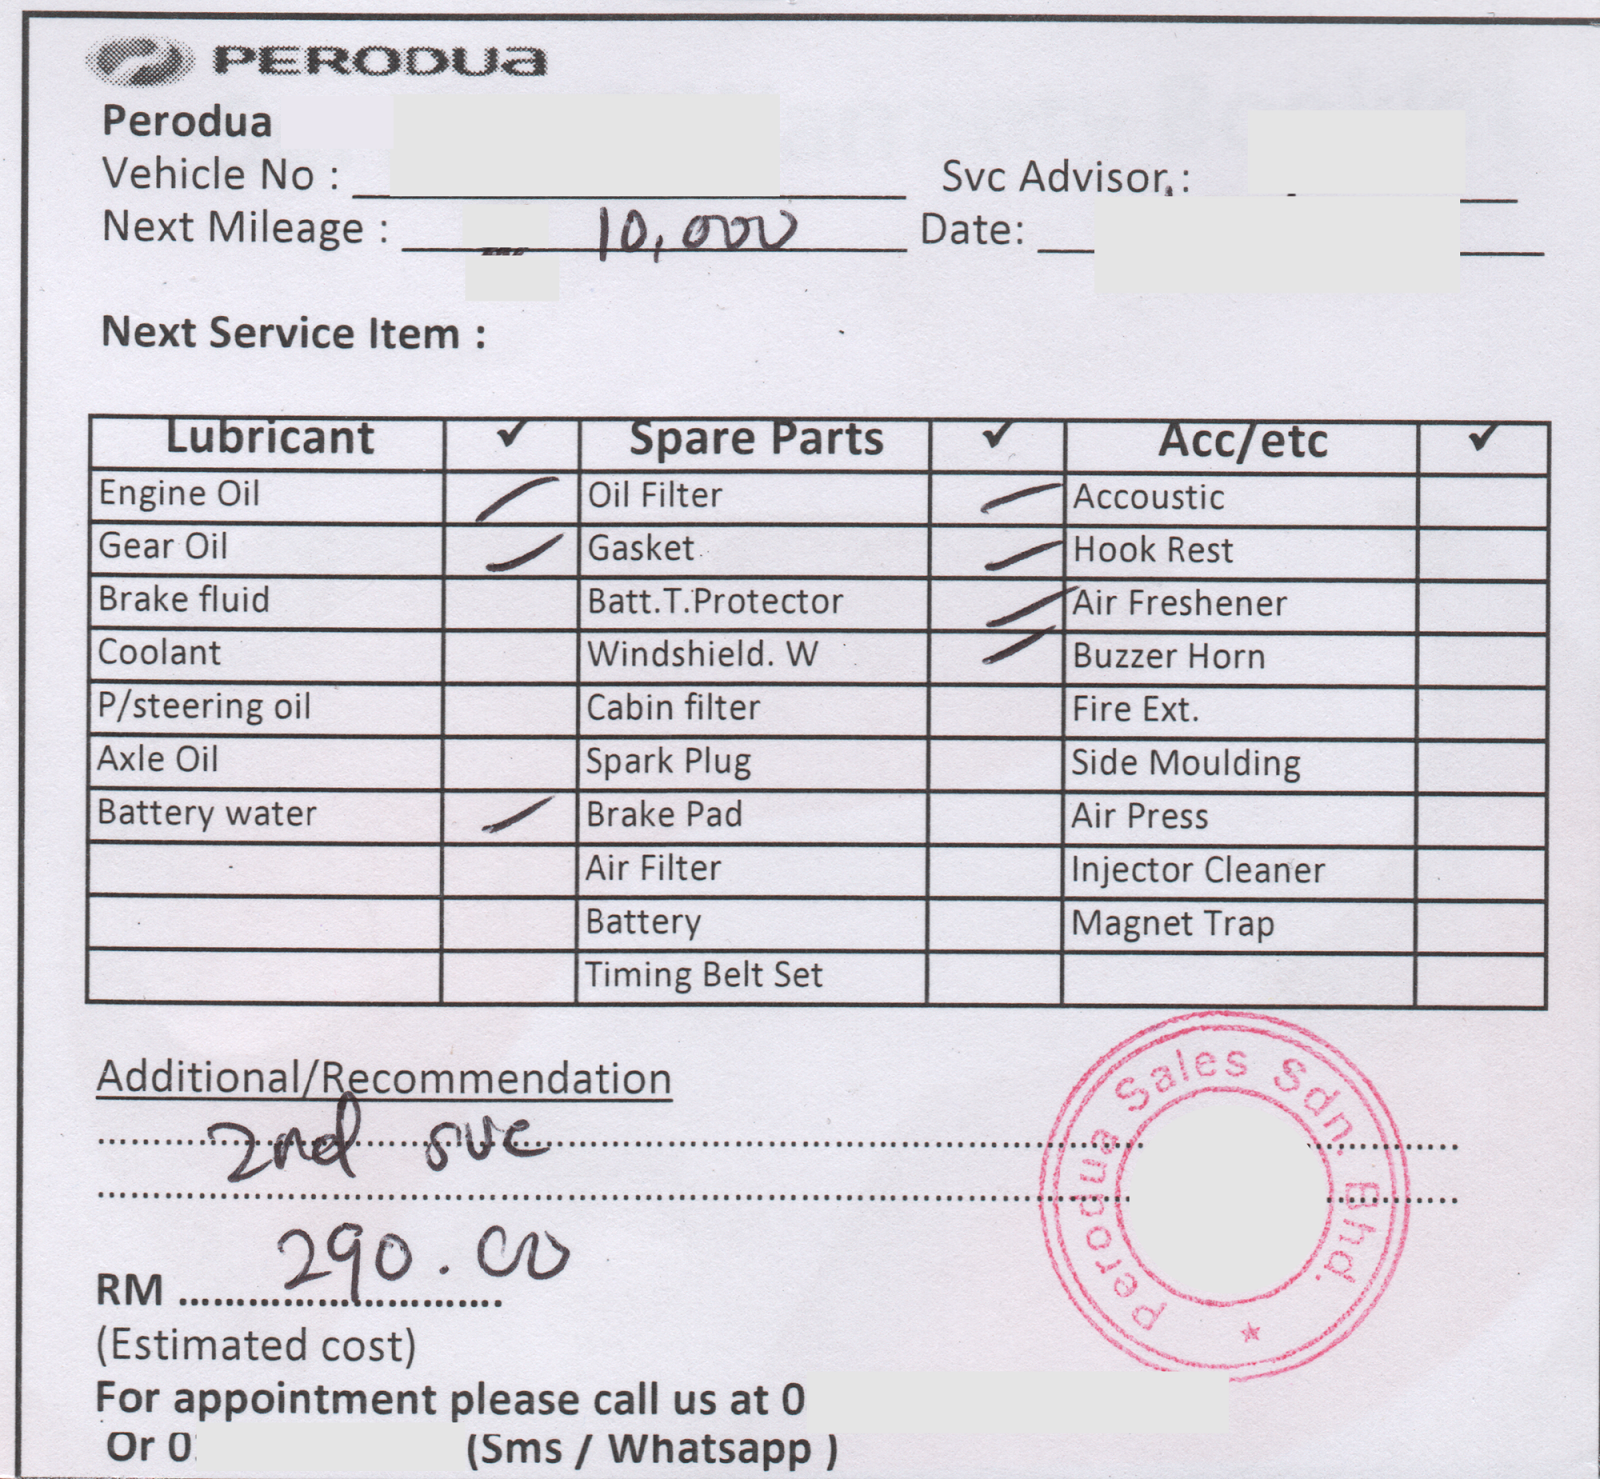 Perodua Bezza: Perodua Bezza first service - free inspection